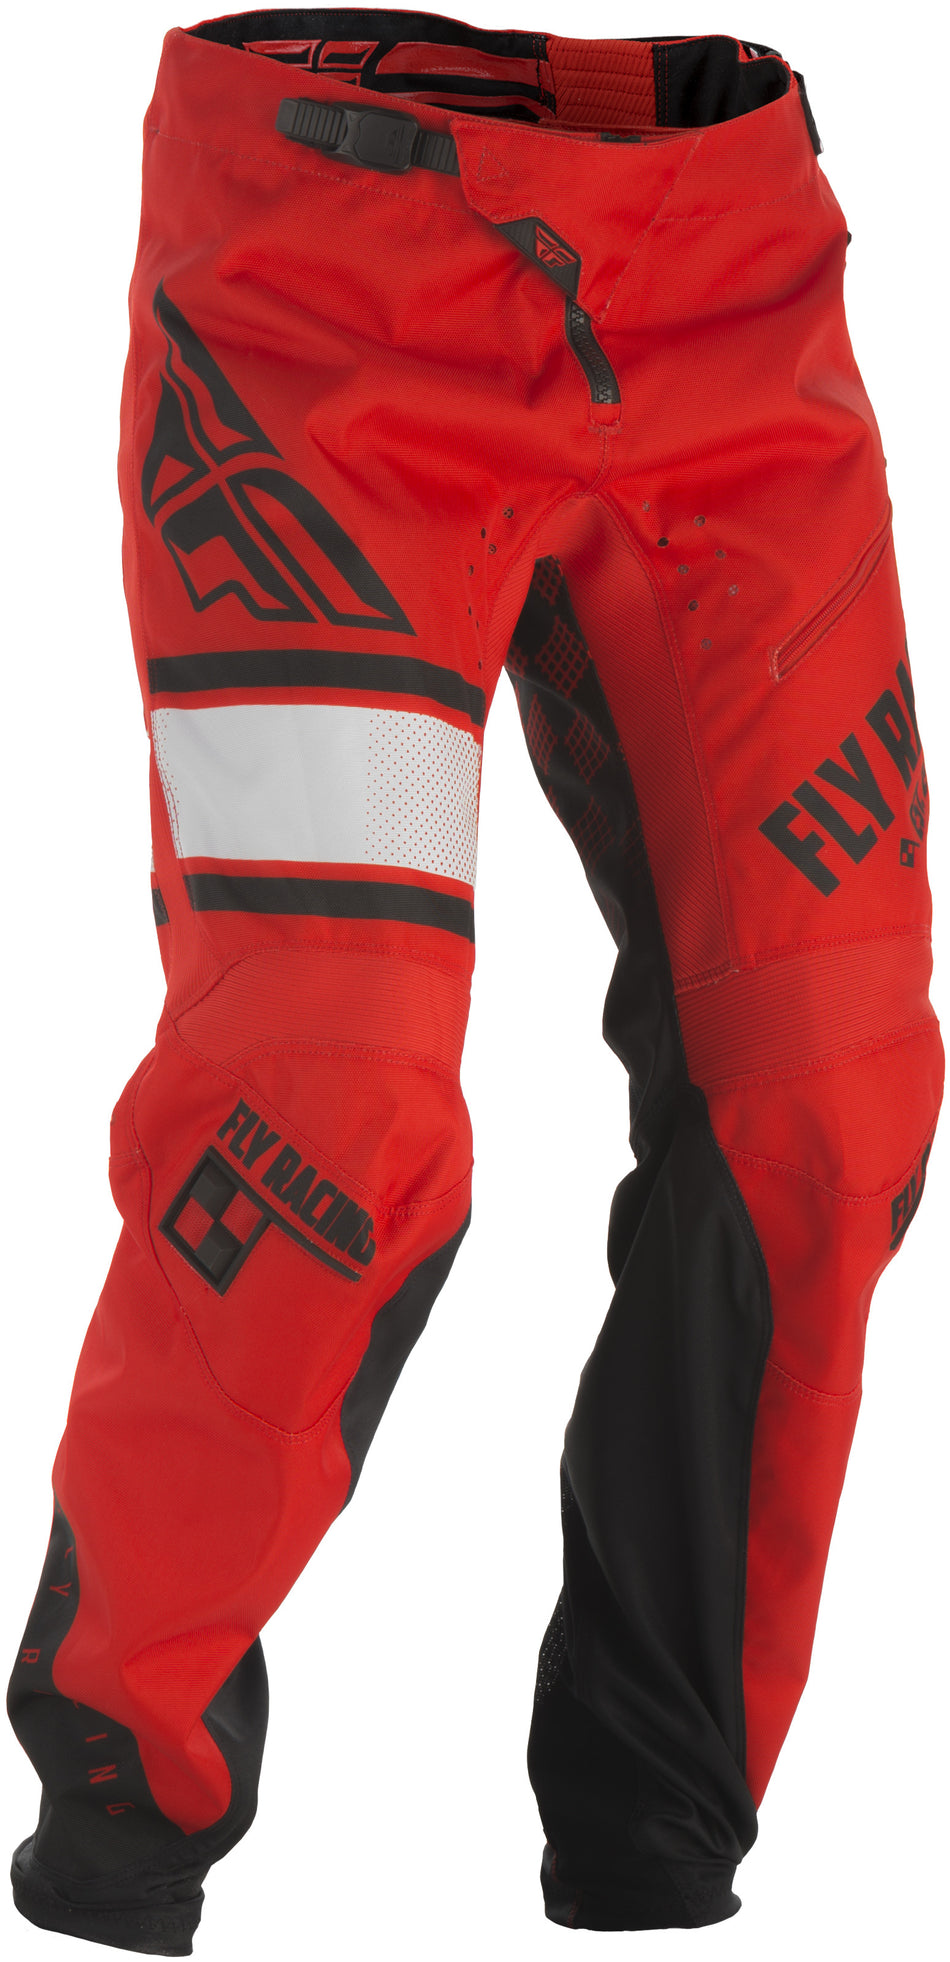 FLY RACING Kinetic Era Bicycle Pants Red/Black Sz 22 371-02222